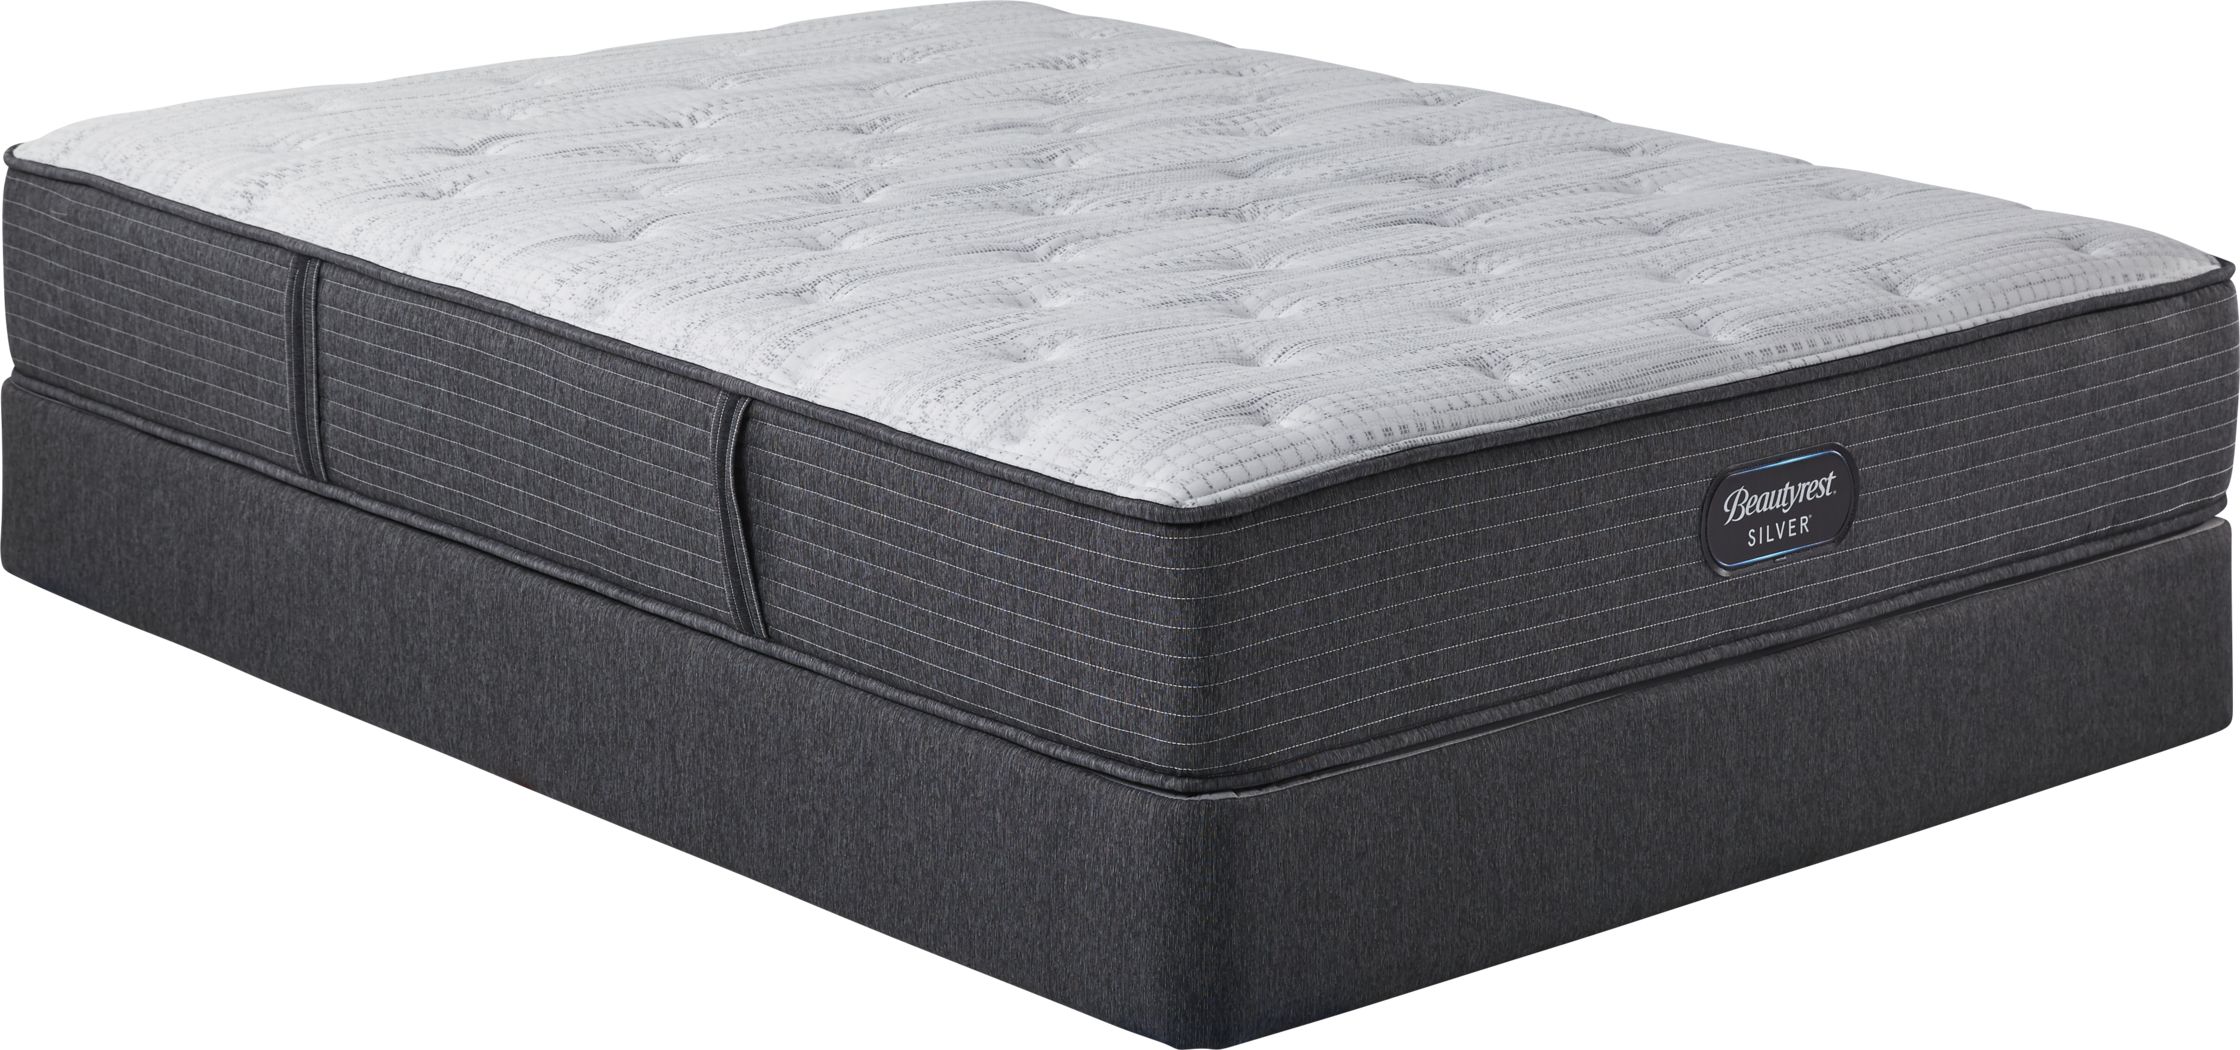 beautyrest silver mattress price